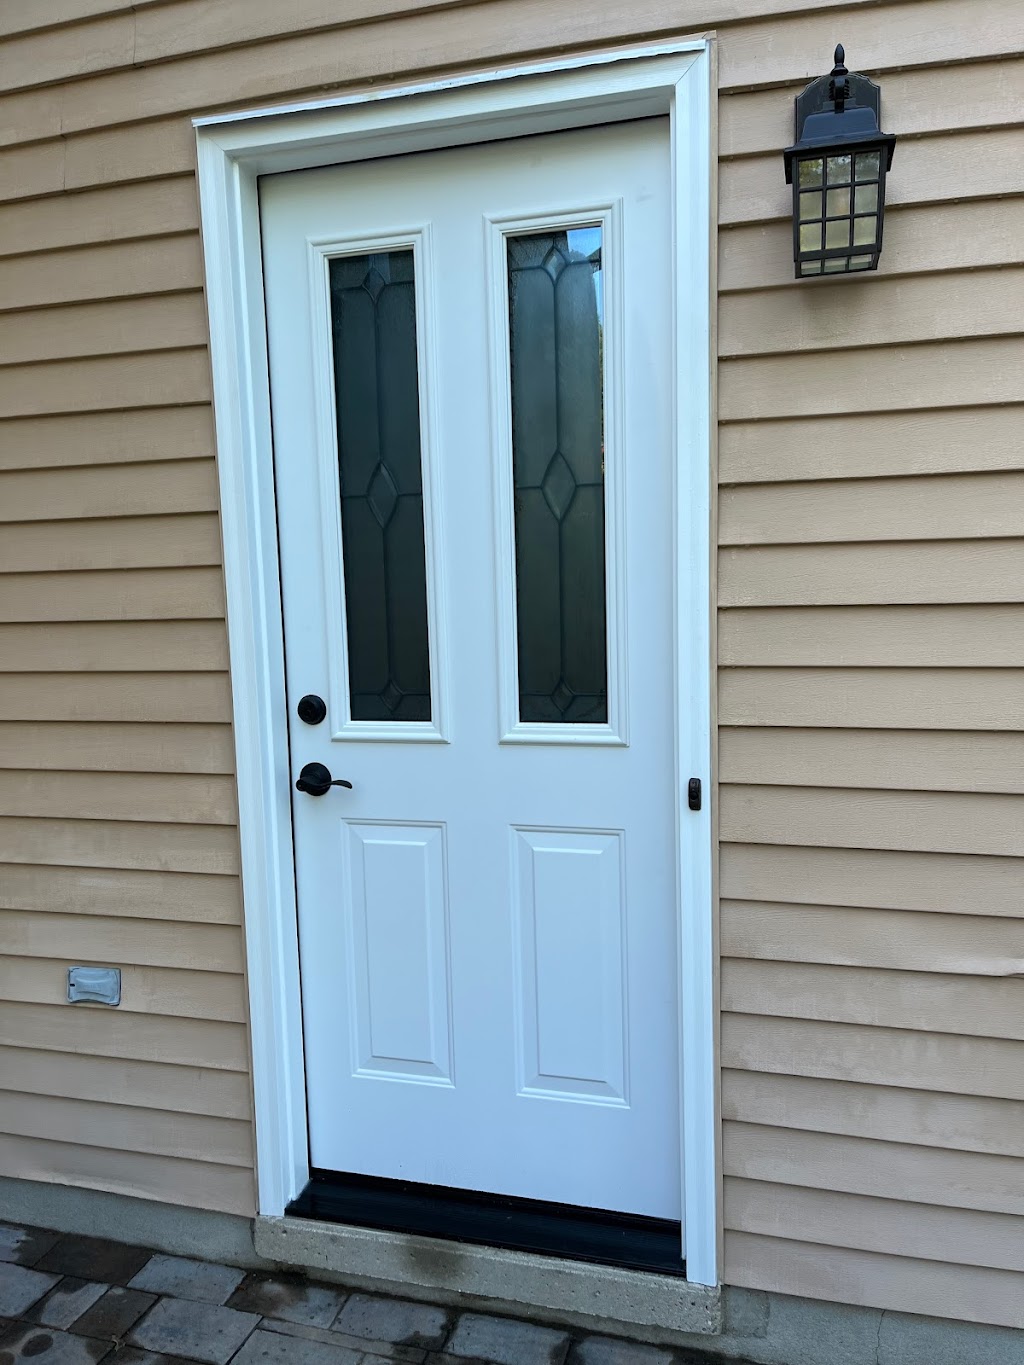 Ace Home Improvements | 342 US-9, Manalapan Township, NJ 07726 | Phone: (732) 617-4070